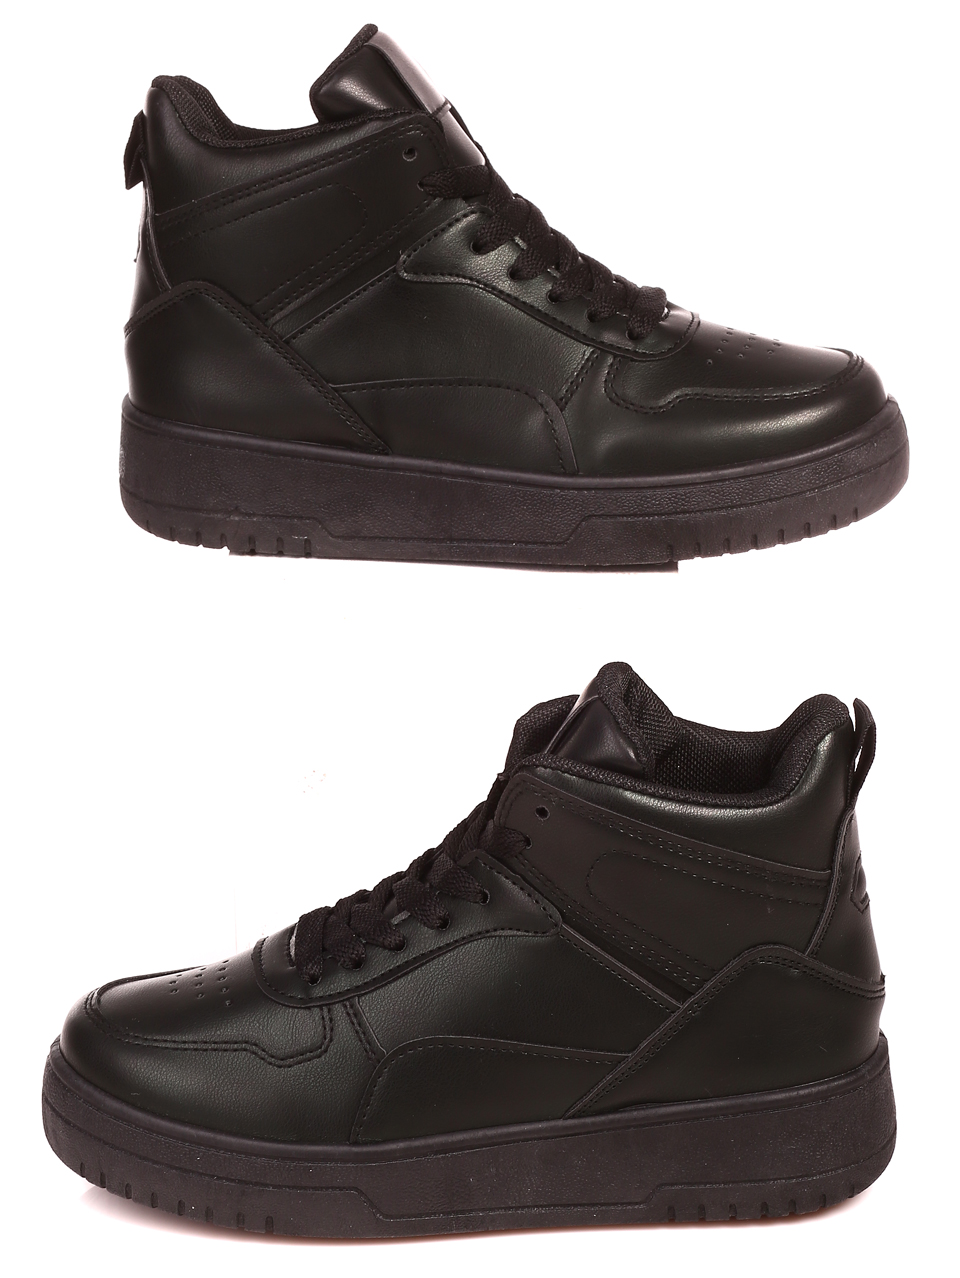 Ежедневни юношески обувки в черно 14U-22539 black 